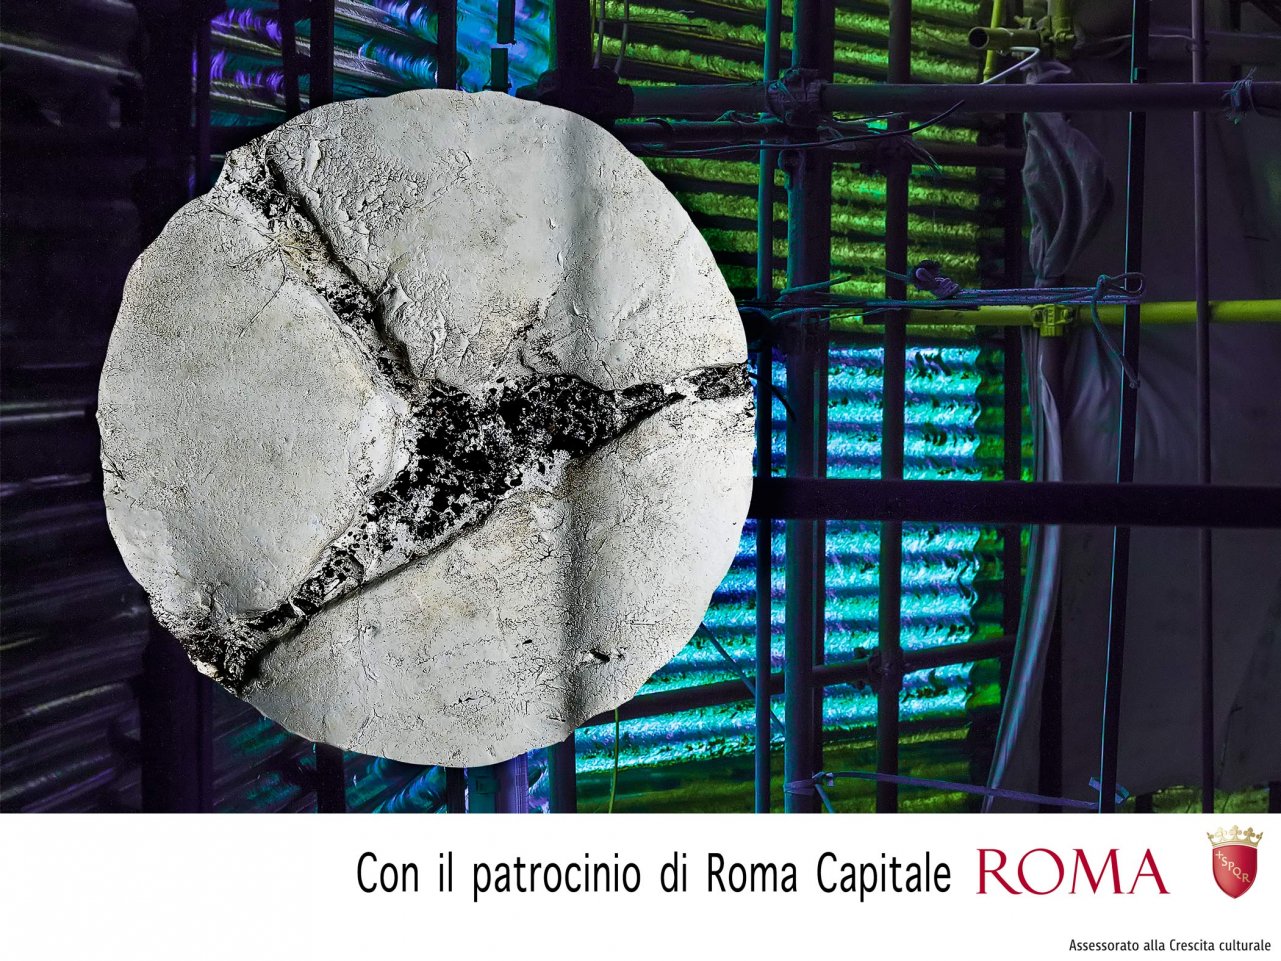 Eugenio Donato, Roman basalt (sculpture, detail) - Alessandro Zazza (photography, detail)